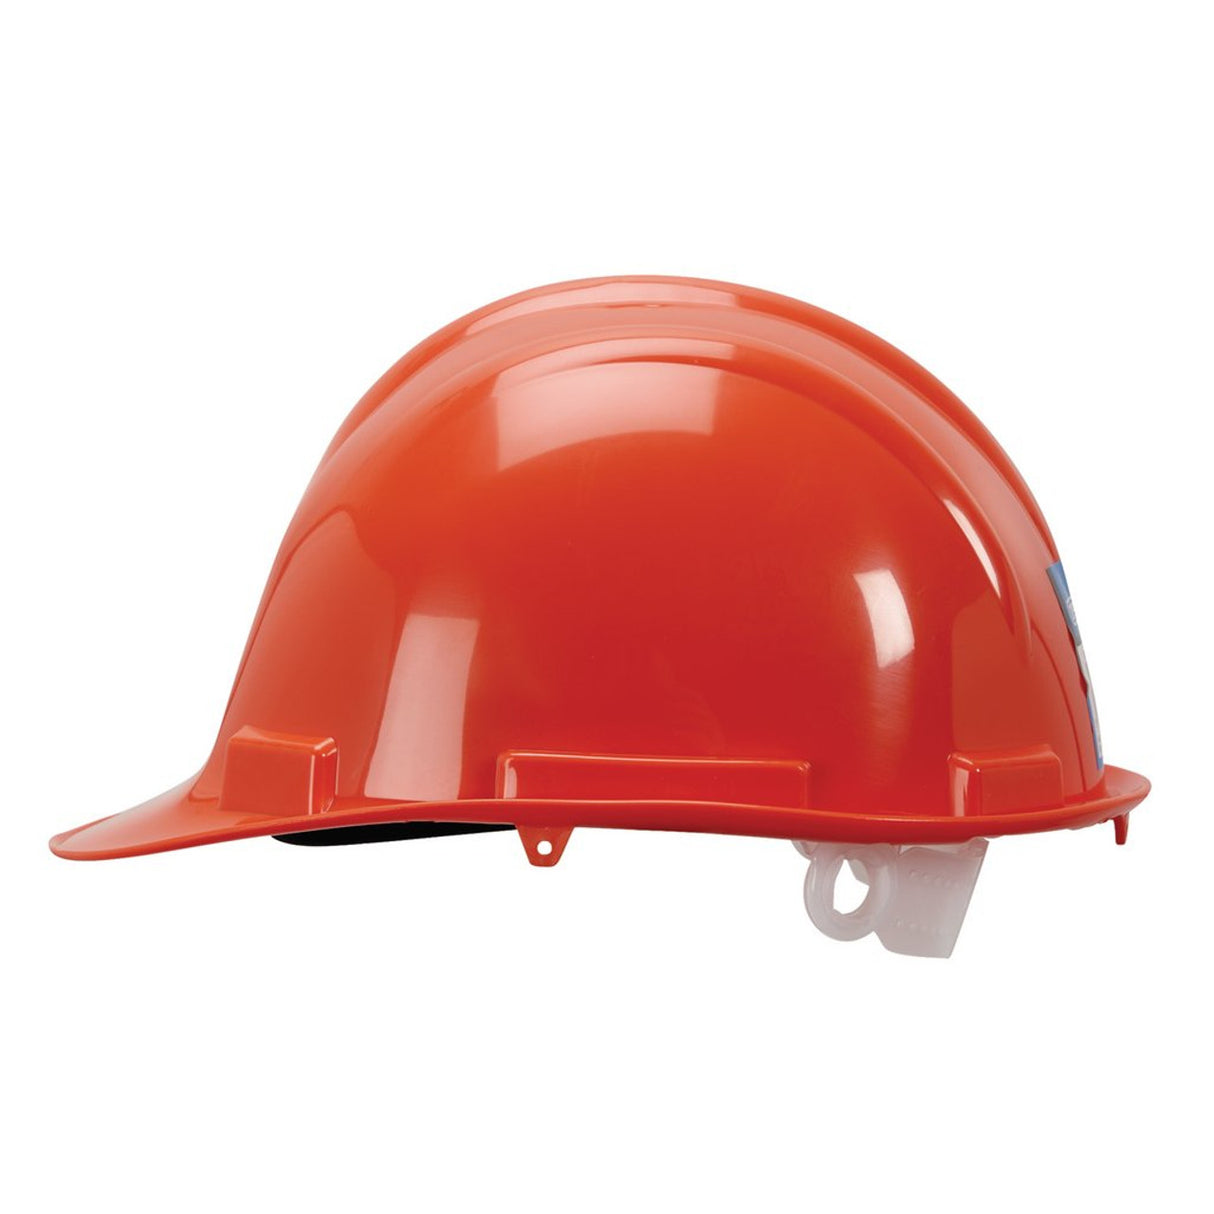 Draper Tools Safety Helmet, Orange